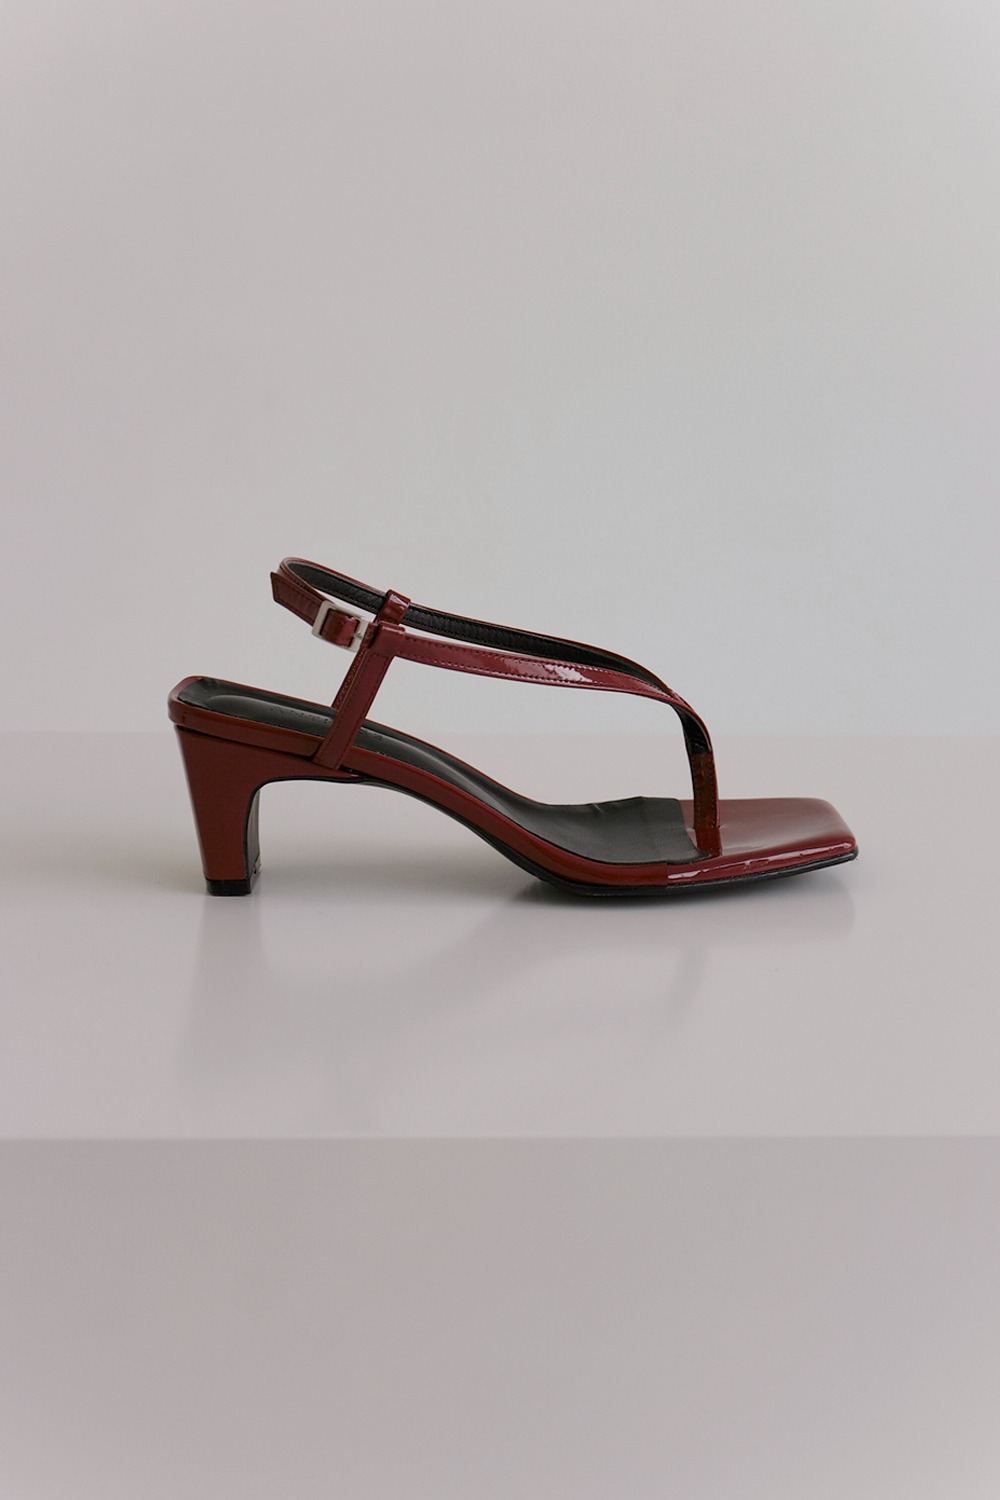 ANTHÈSE Pierre flip-flop heel, deep red (10%)